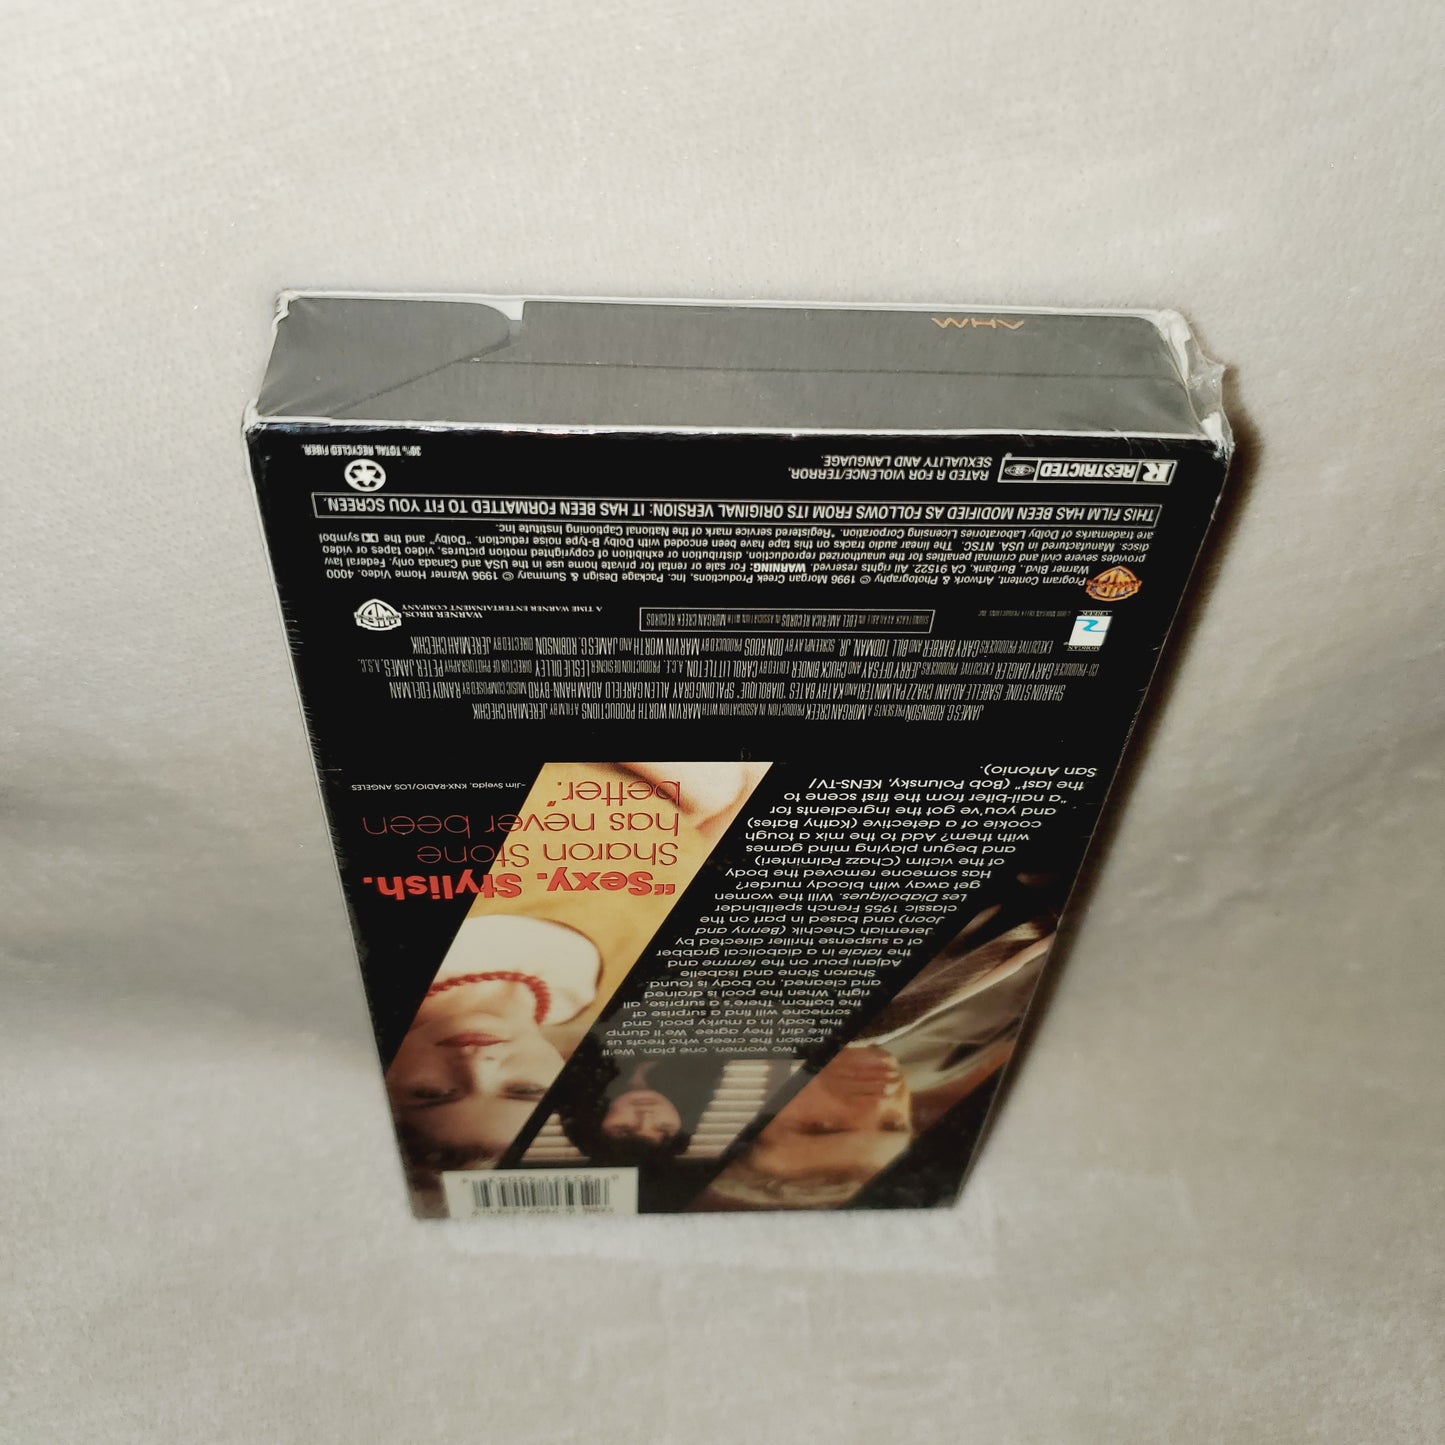 '96 Vintage Diabolique Murder Mystery Suspense Thriller VHS WB - NIP(Sealed)